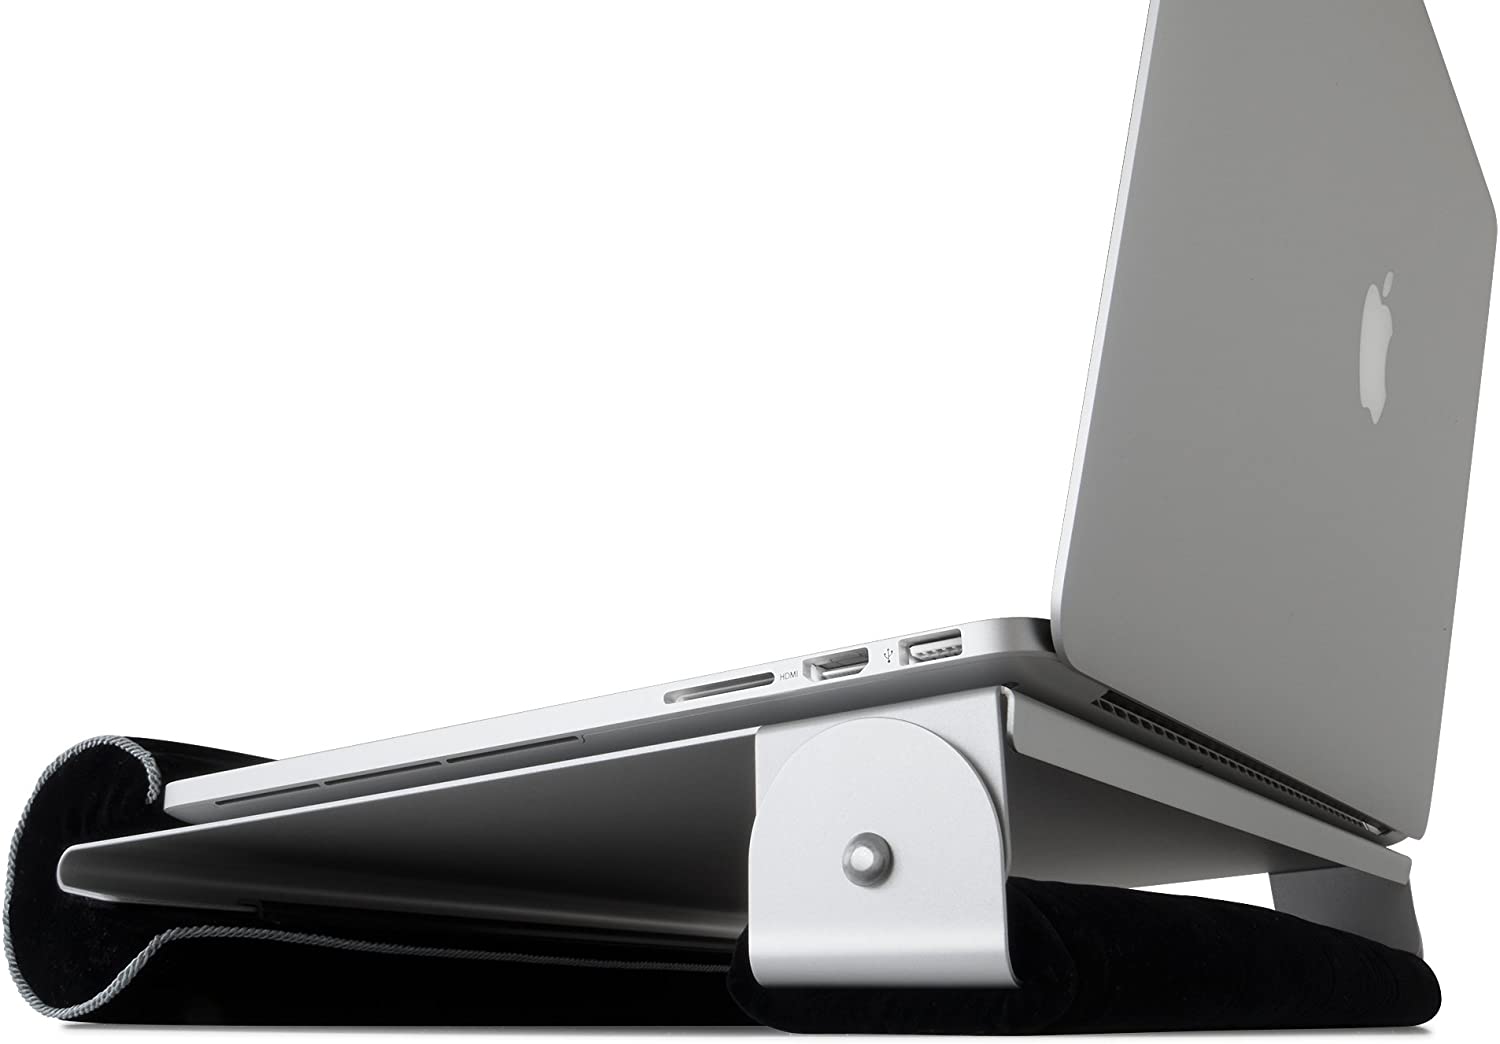 Rain Design iLap Lap Stand 15"W for MacBook Pro 15"